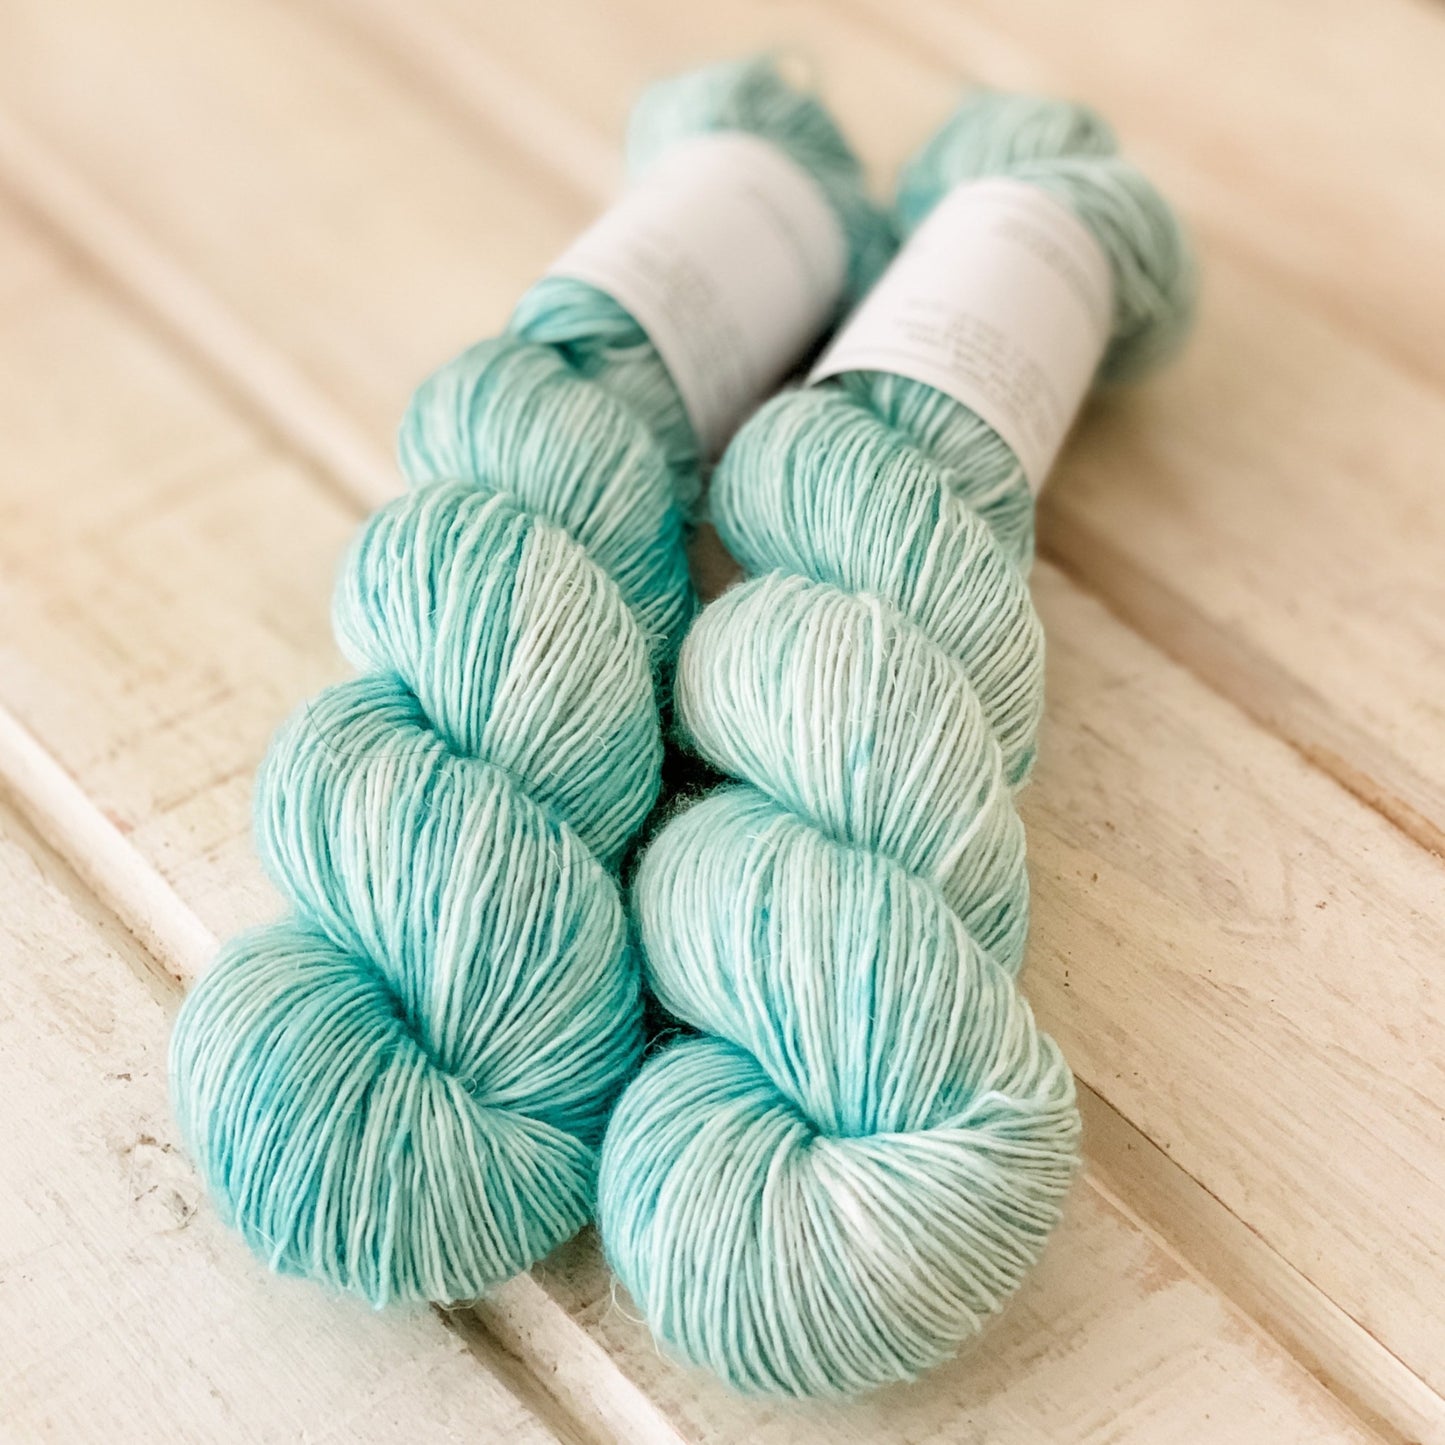 Cove - Lysefjord Single - Tonal Yarn - Hand dyed yarn